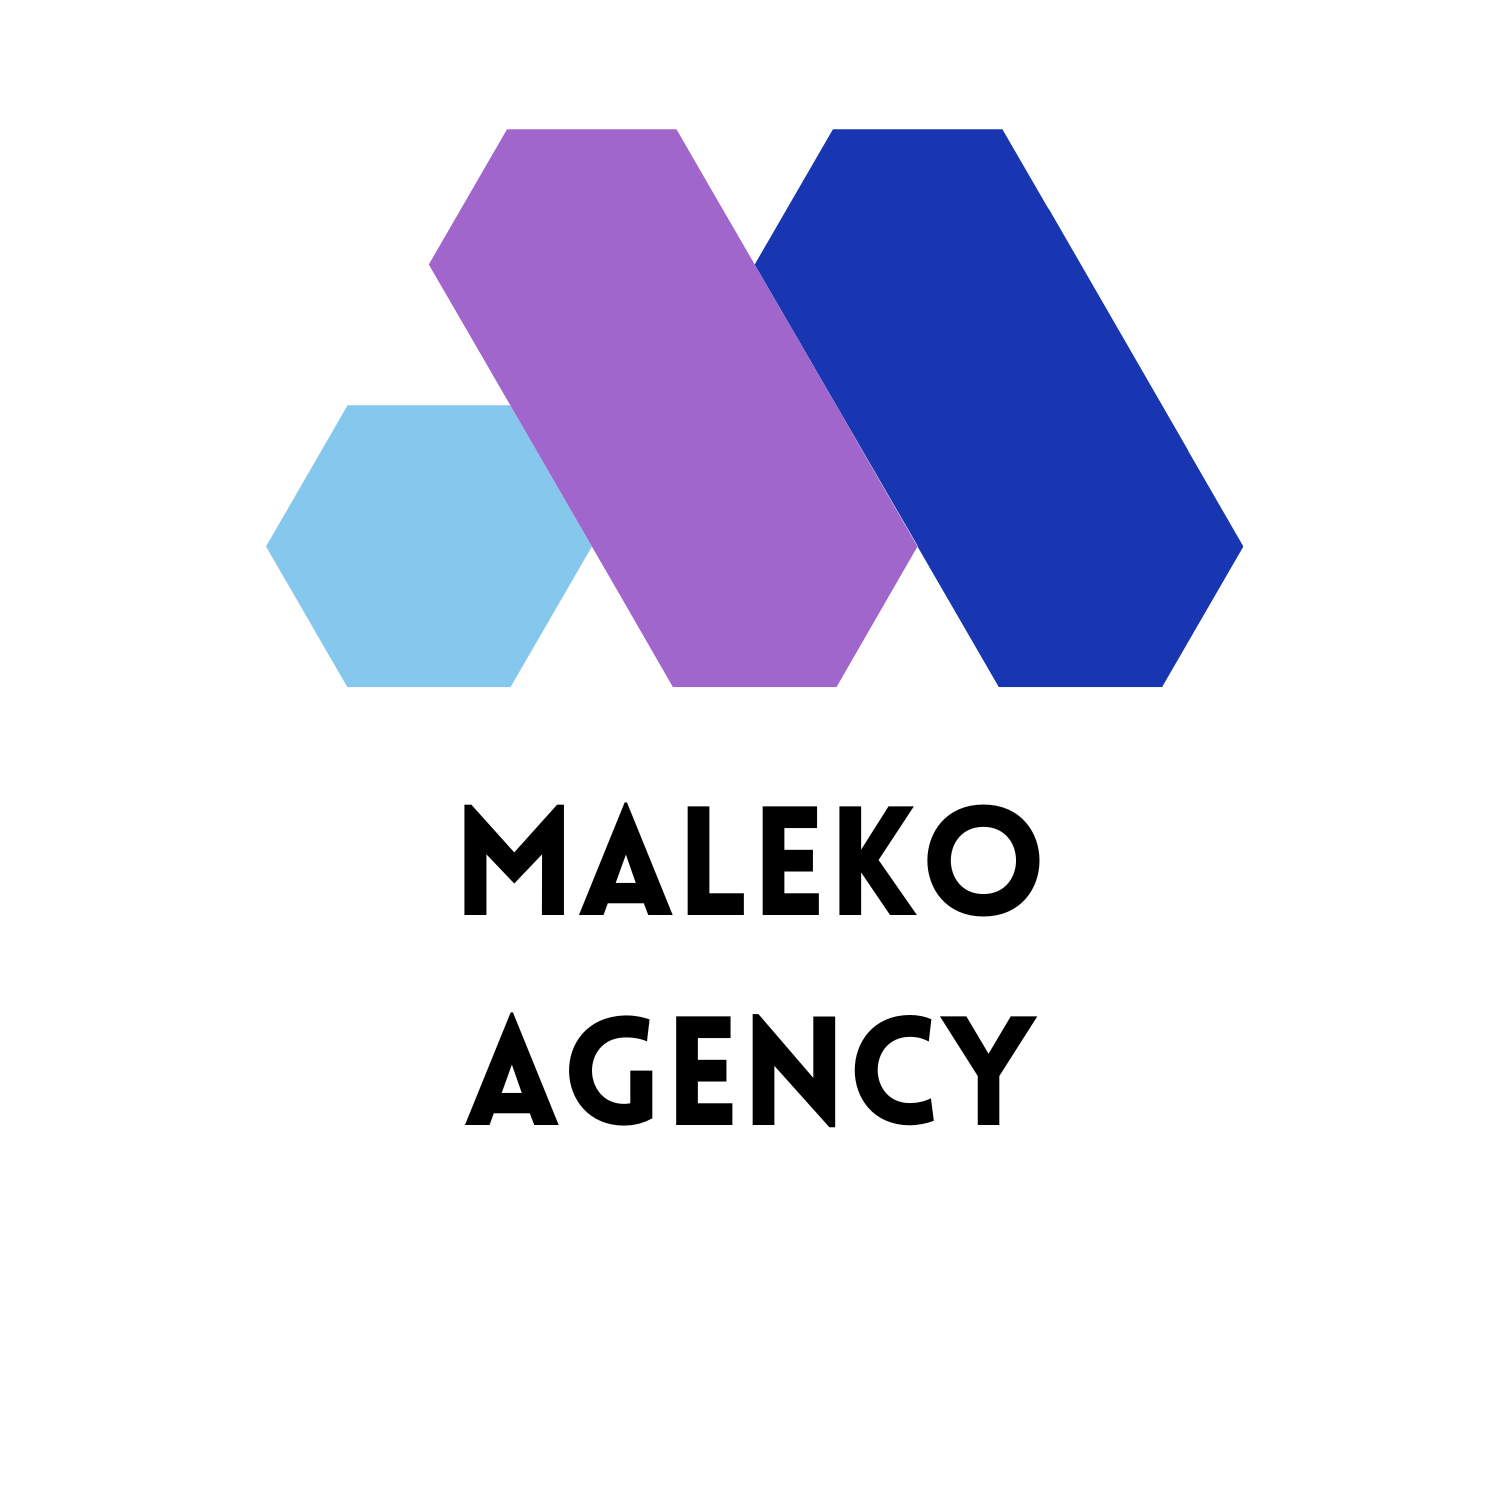 Maleko Agency Promo: Flash Sale 35% Off